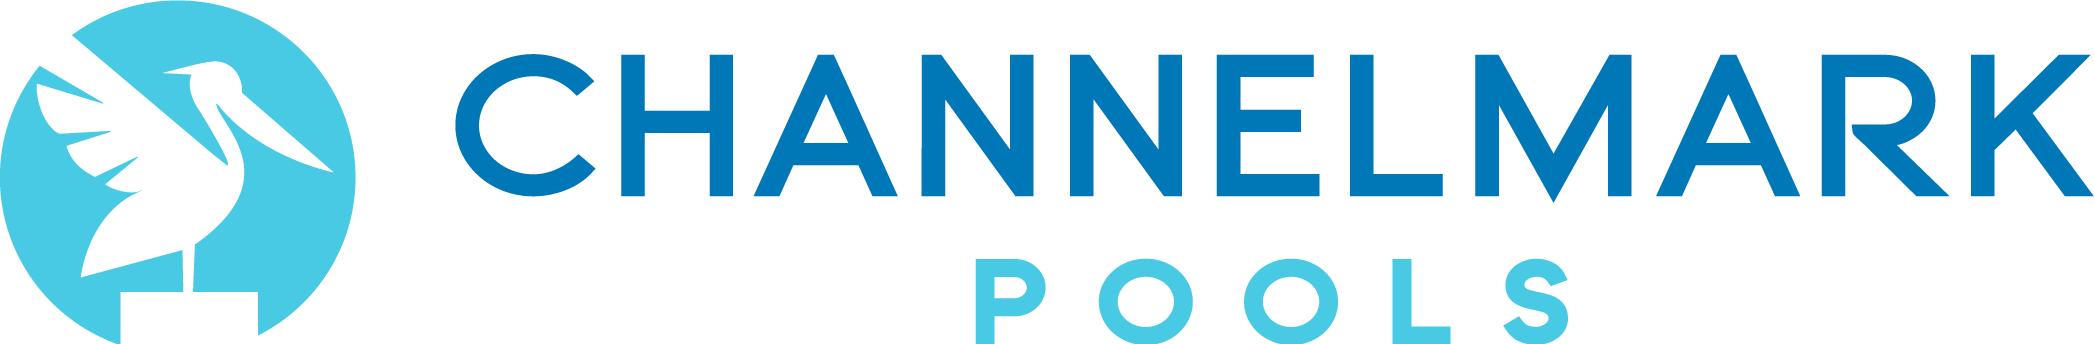 Channelmark Pools Logo